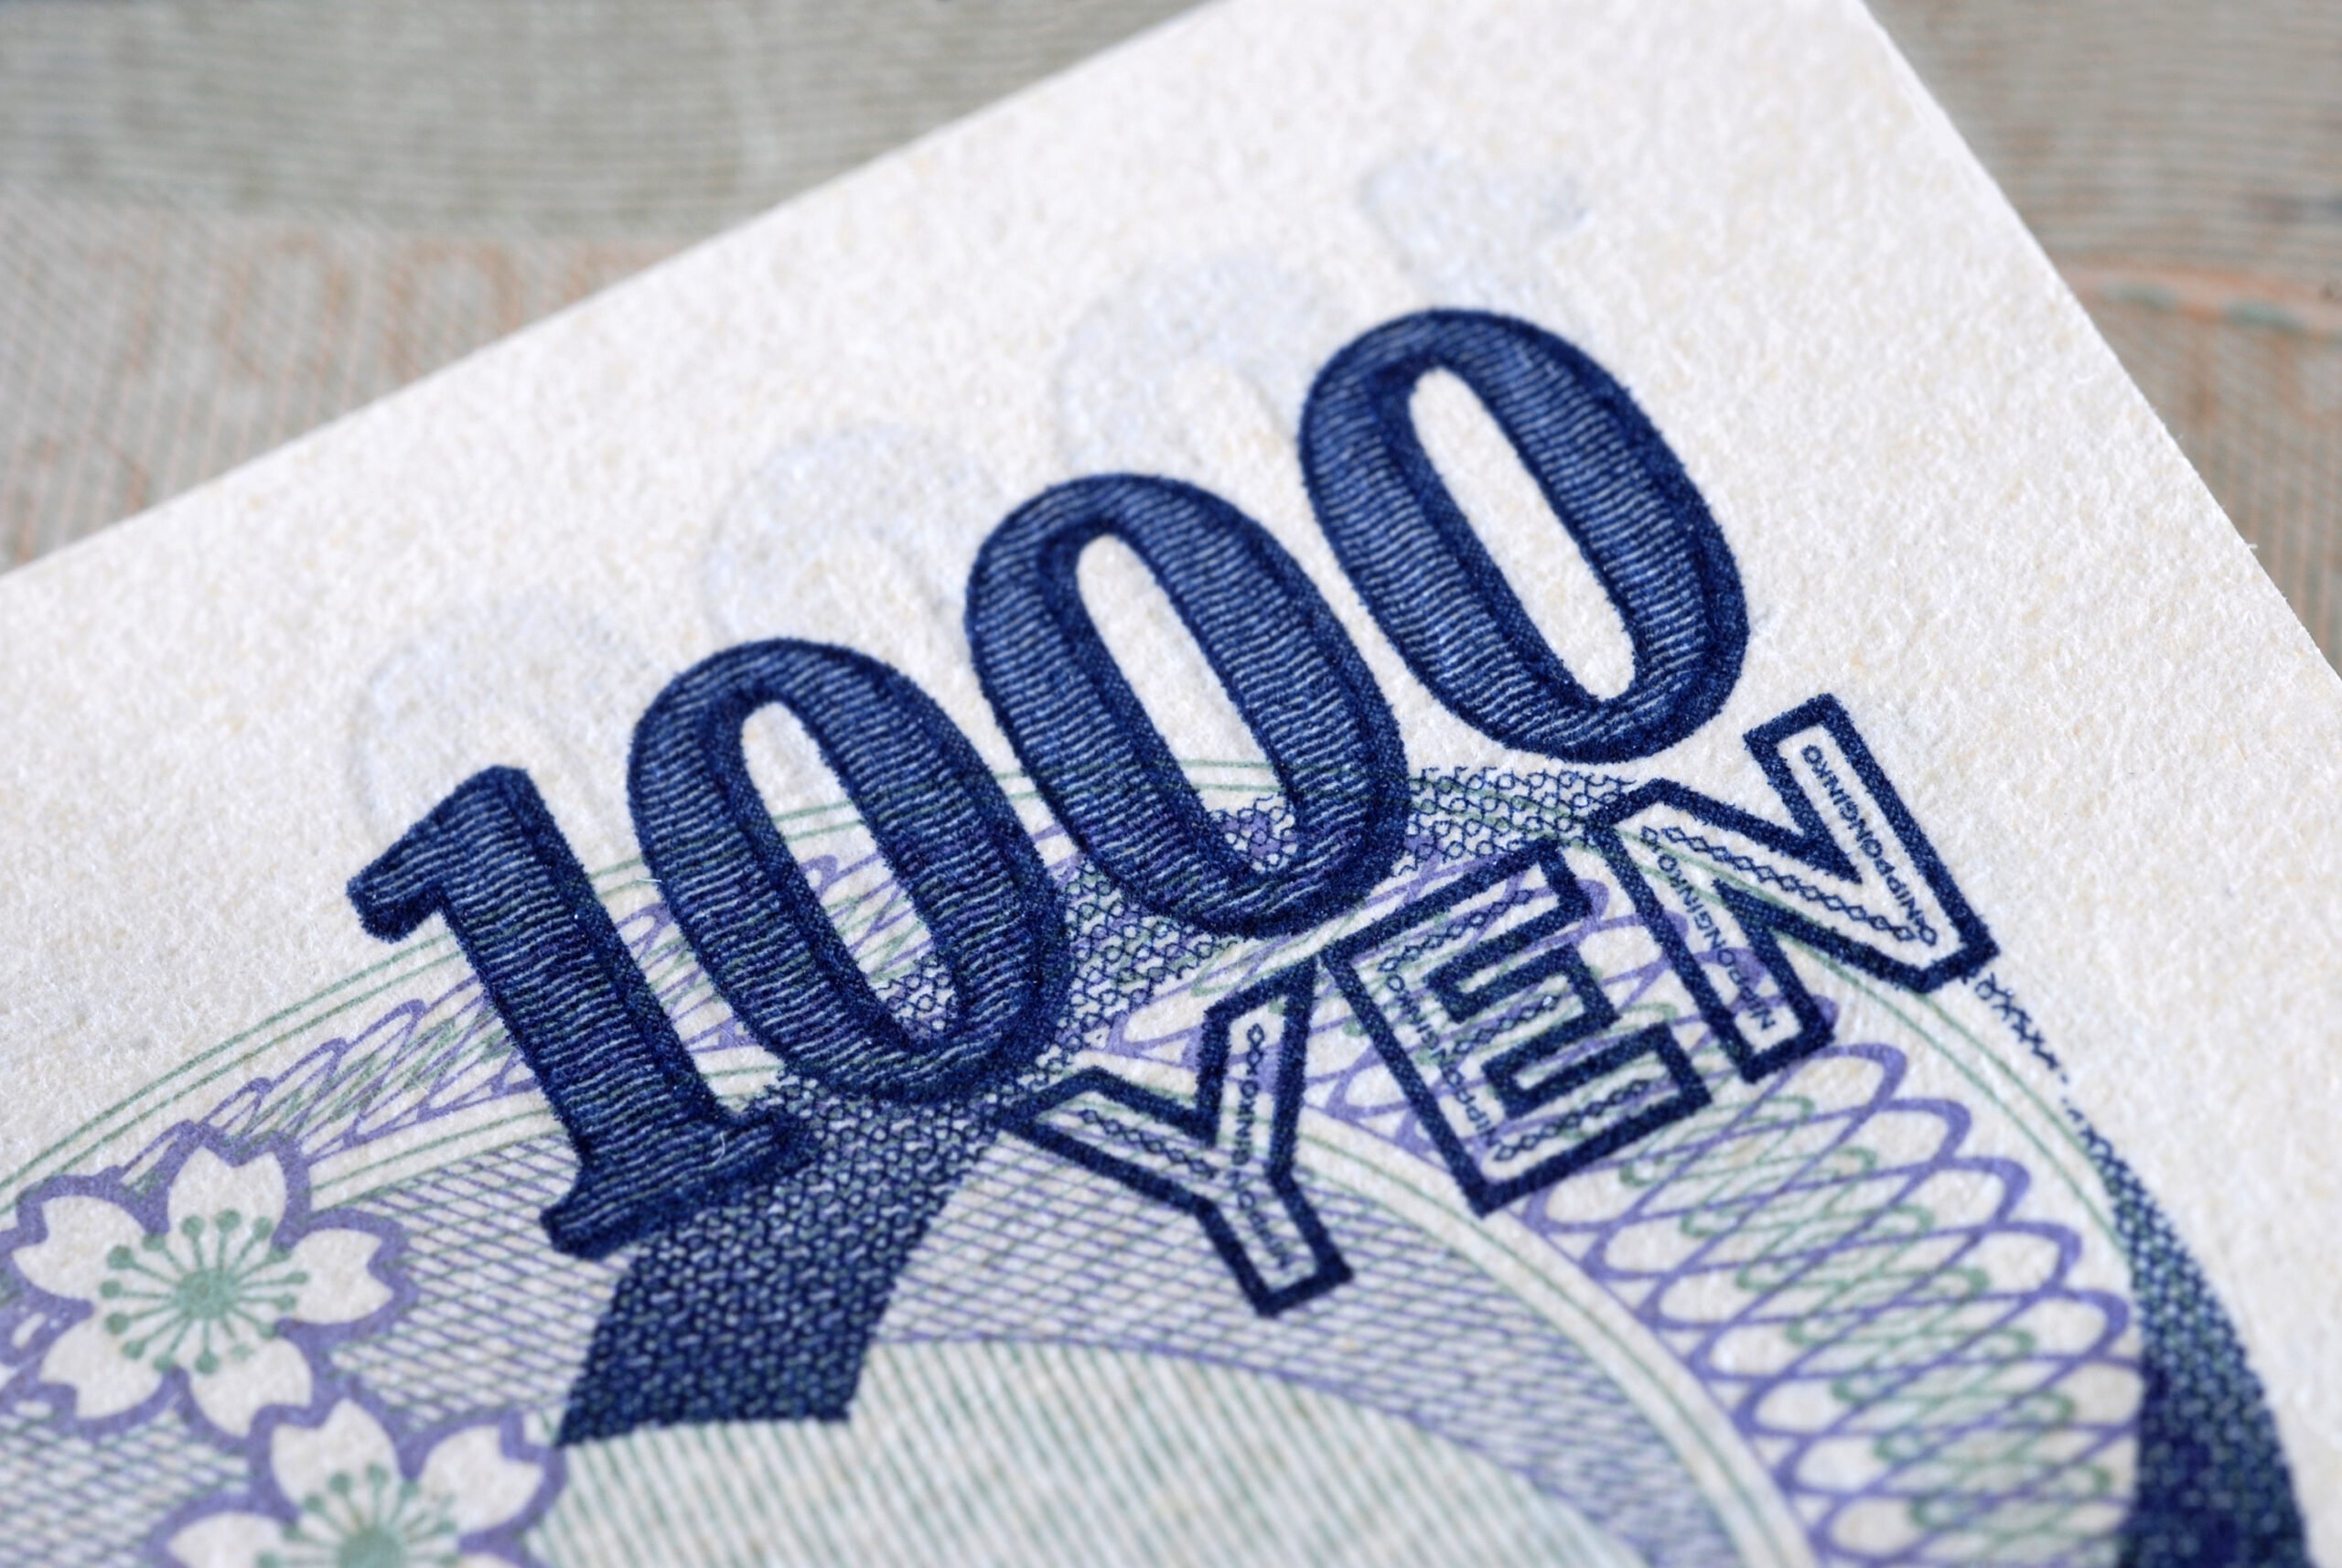 japanese yen bill scaled 1